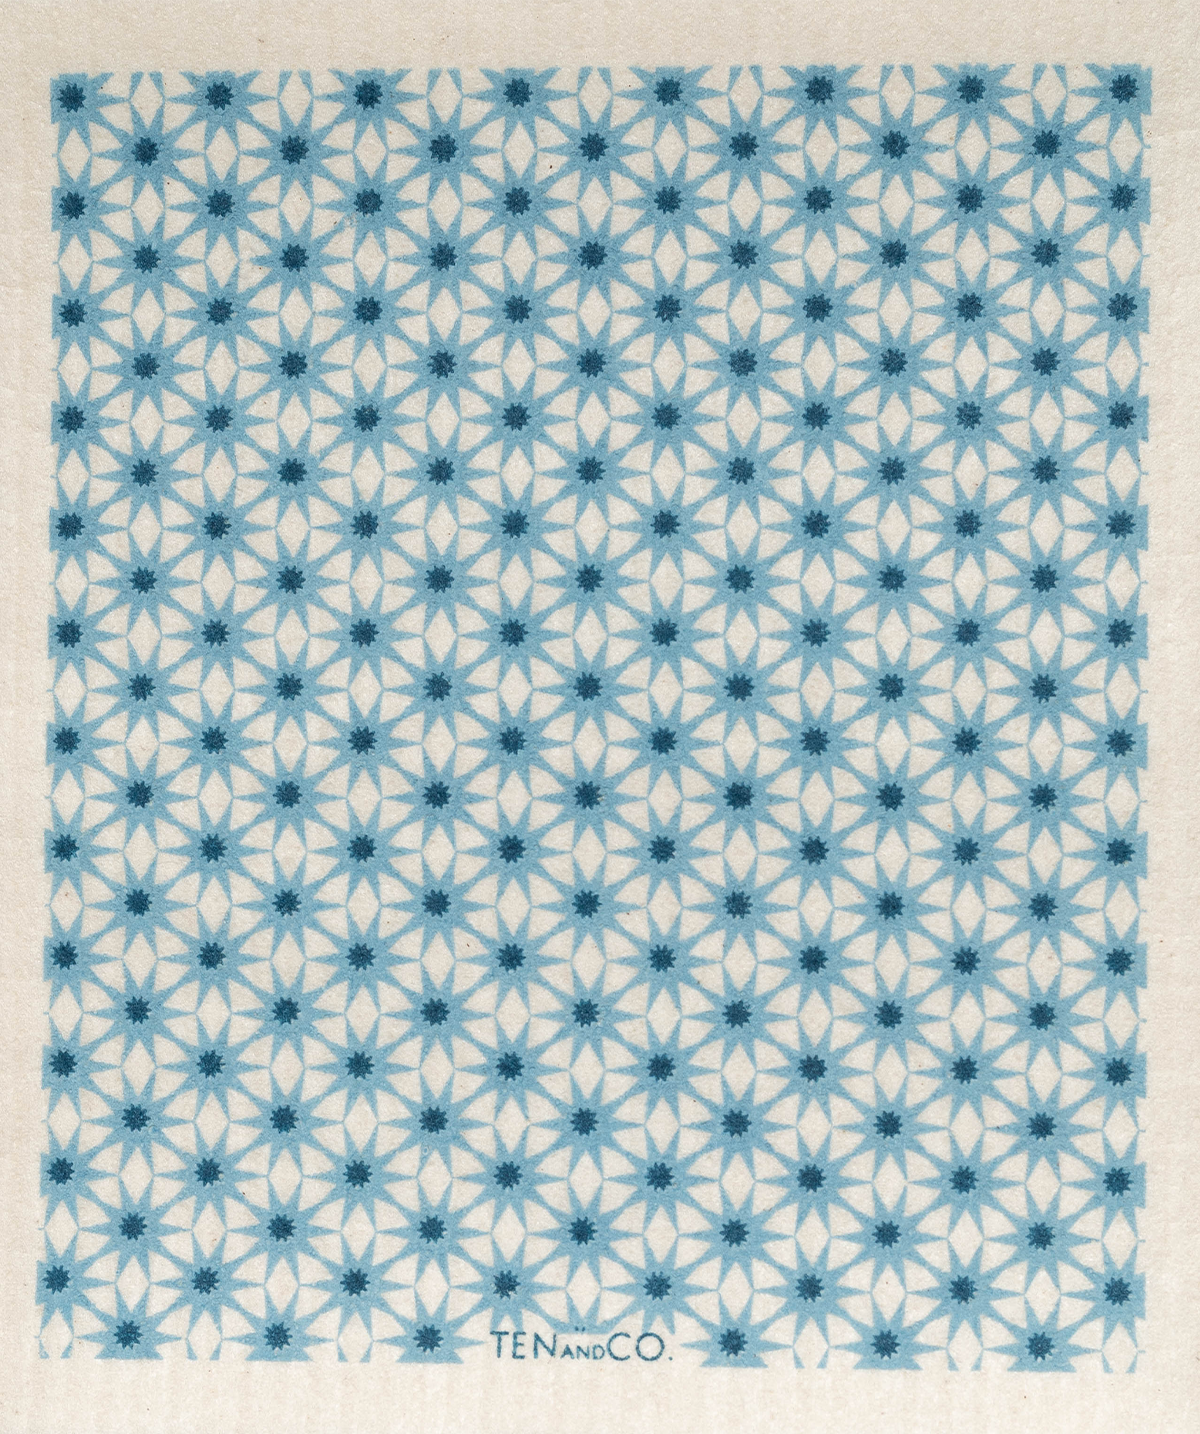 Ten and Co. Starburst Sponge Cloth in Blue